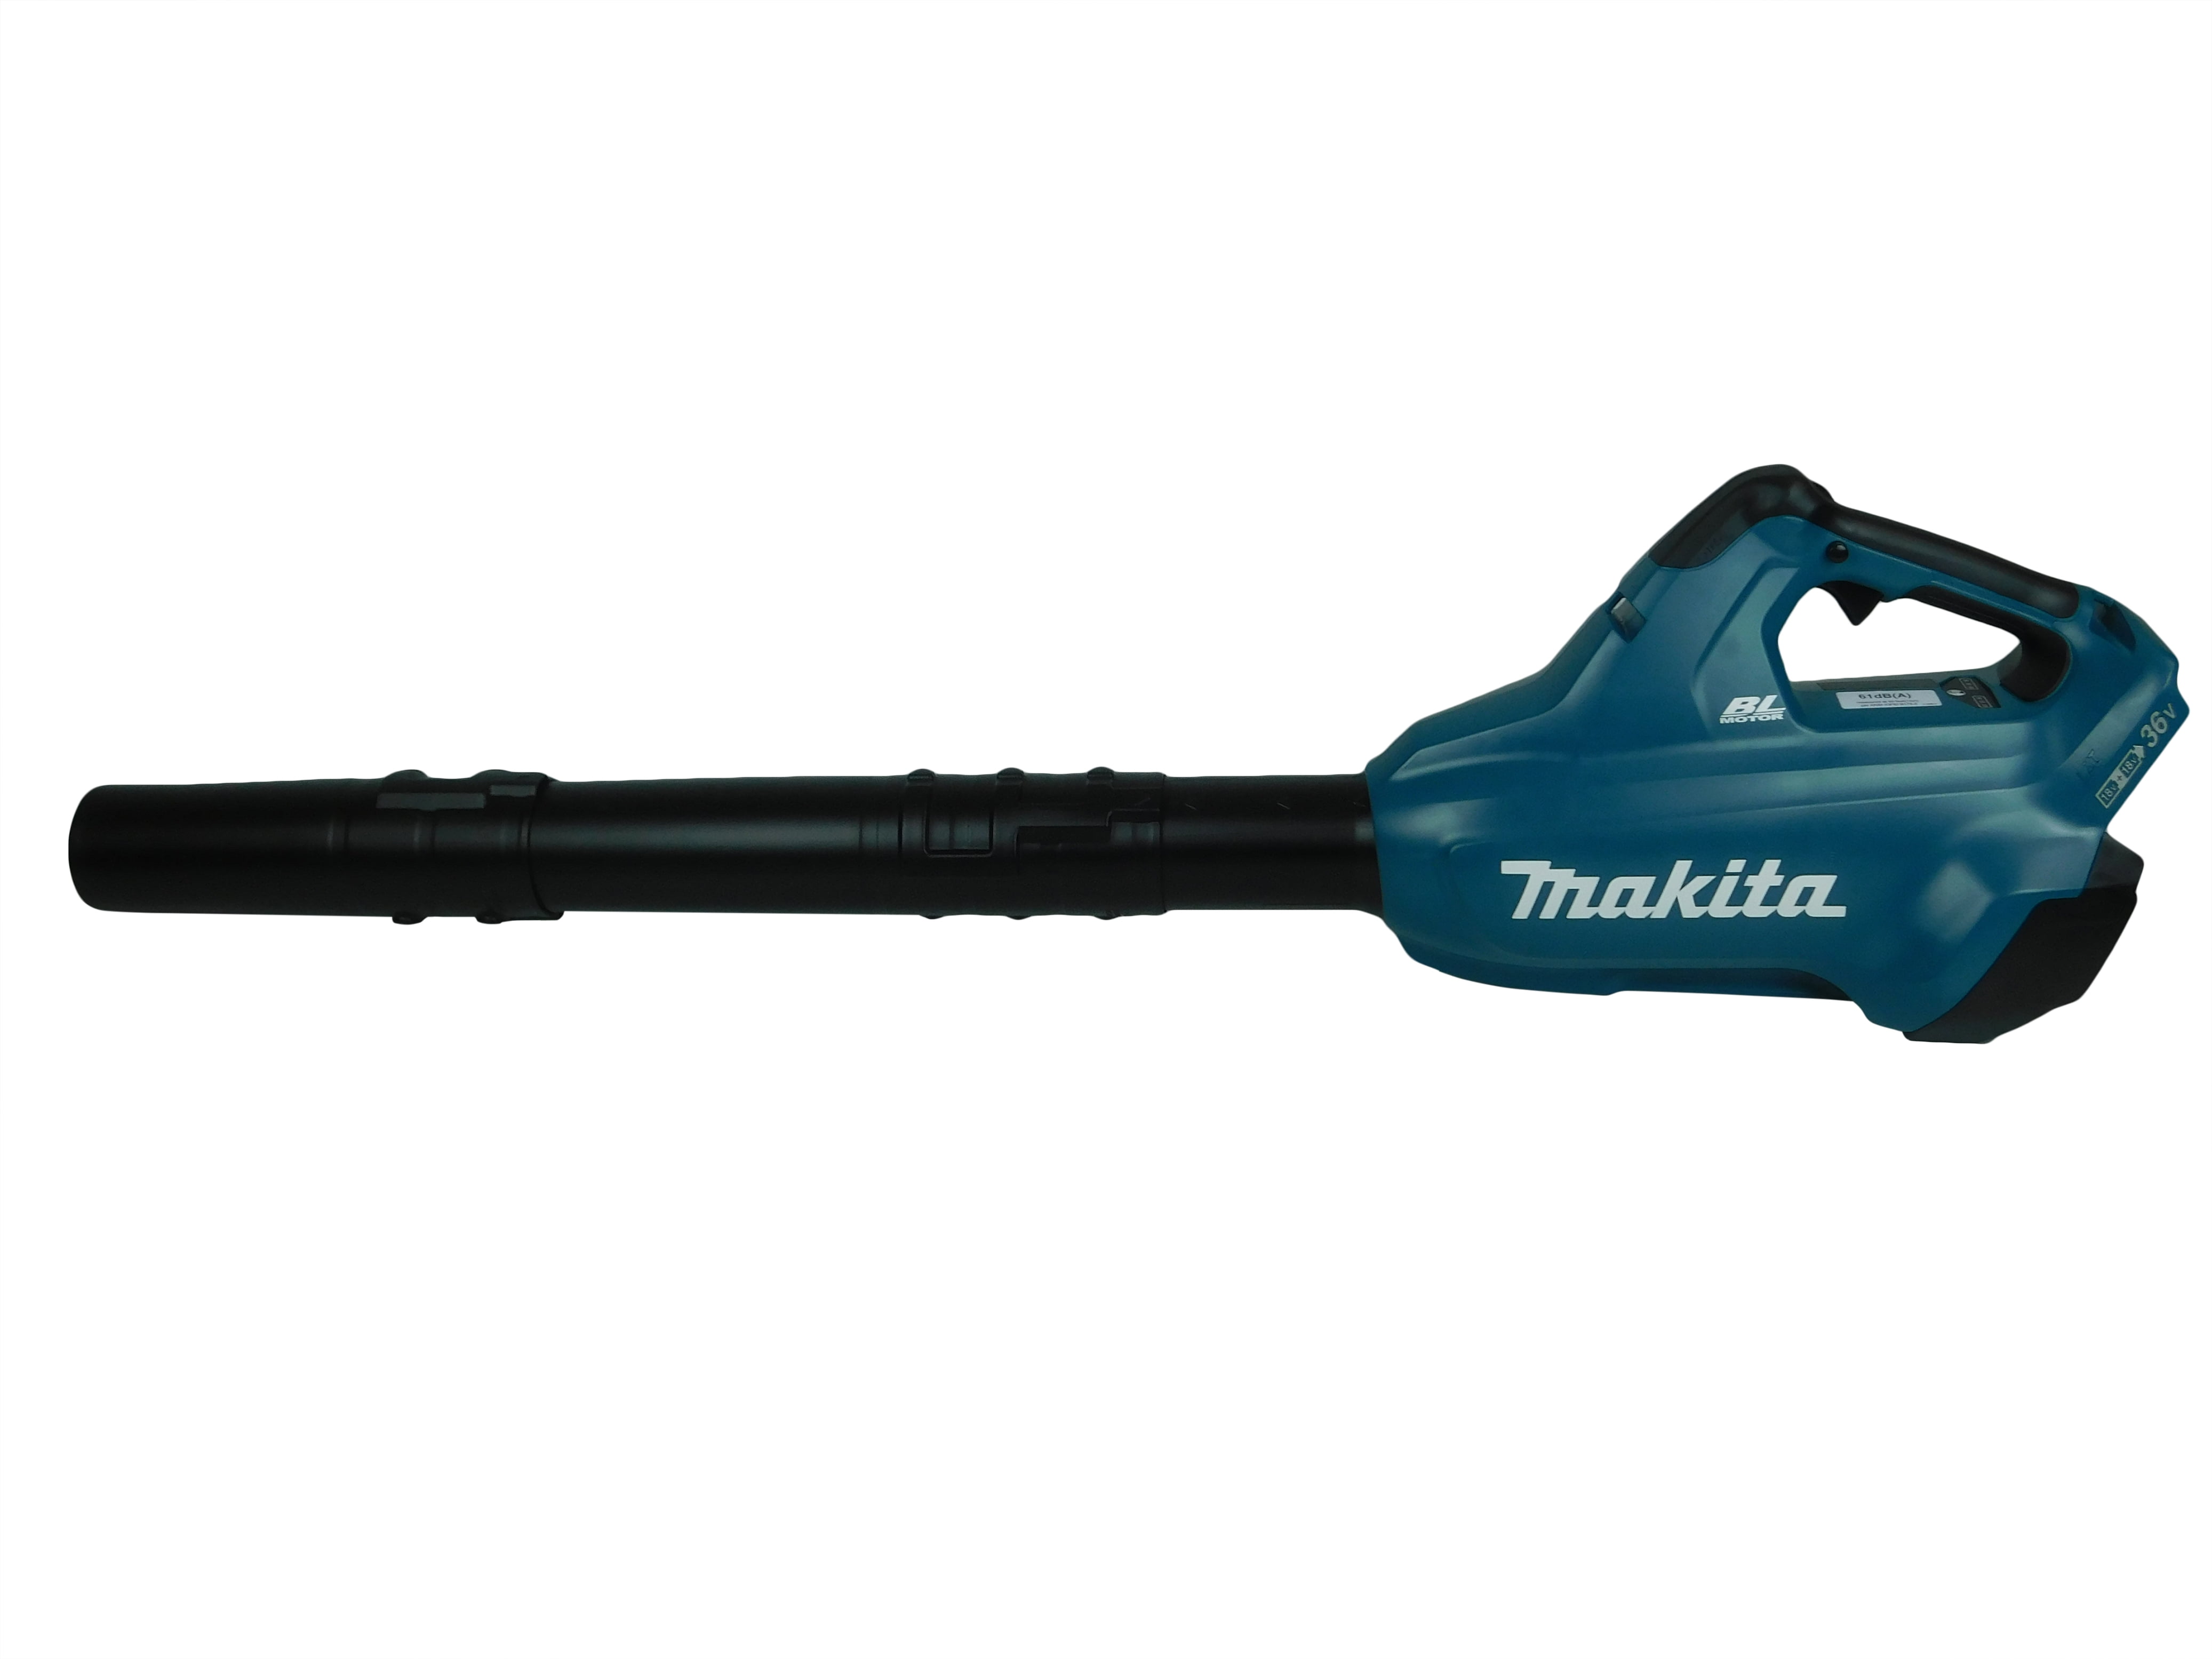 Image of Makita XBU02Z 18V LXT Lithium-Ion Cordless Stick Blower